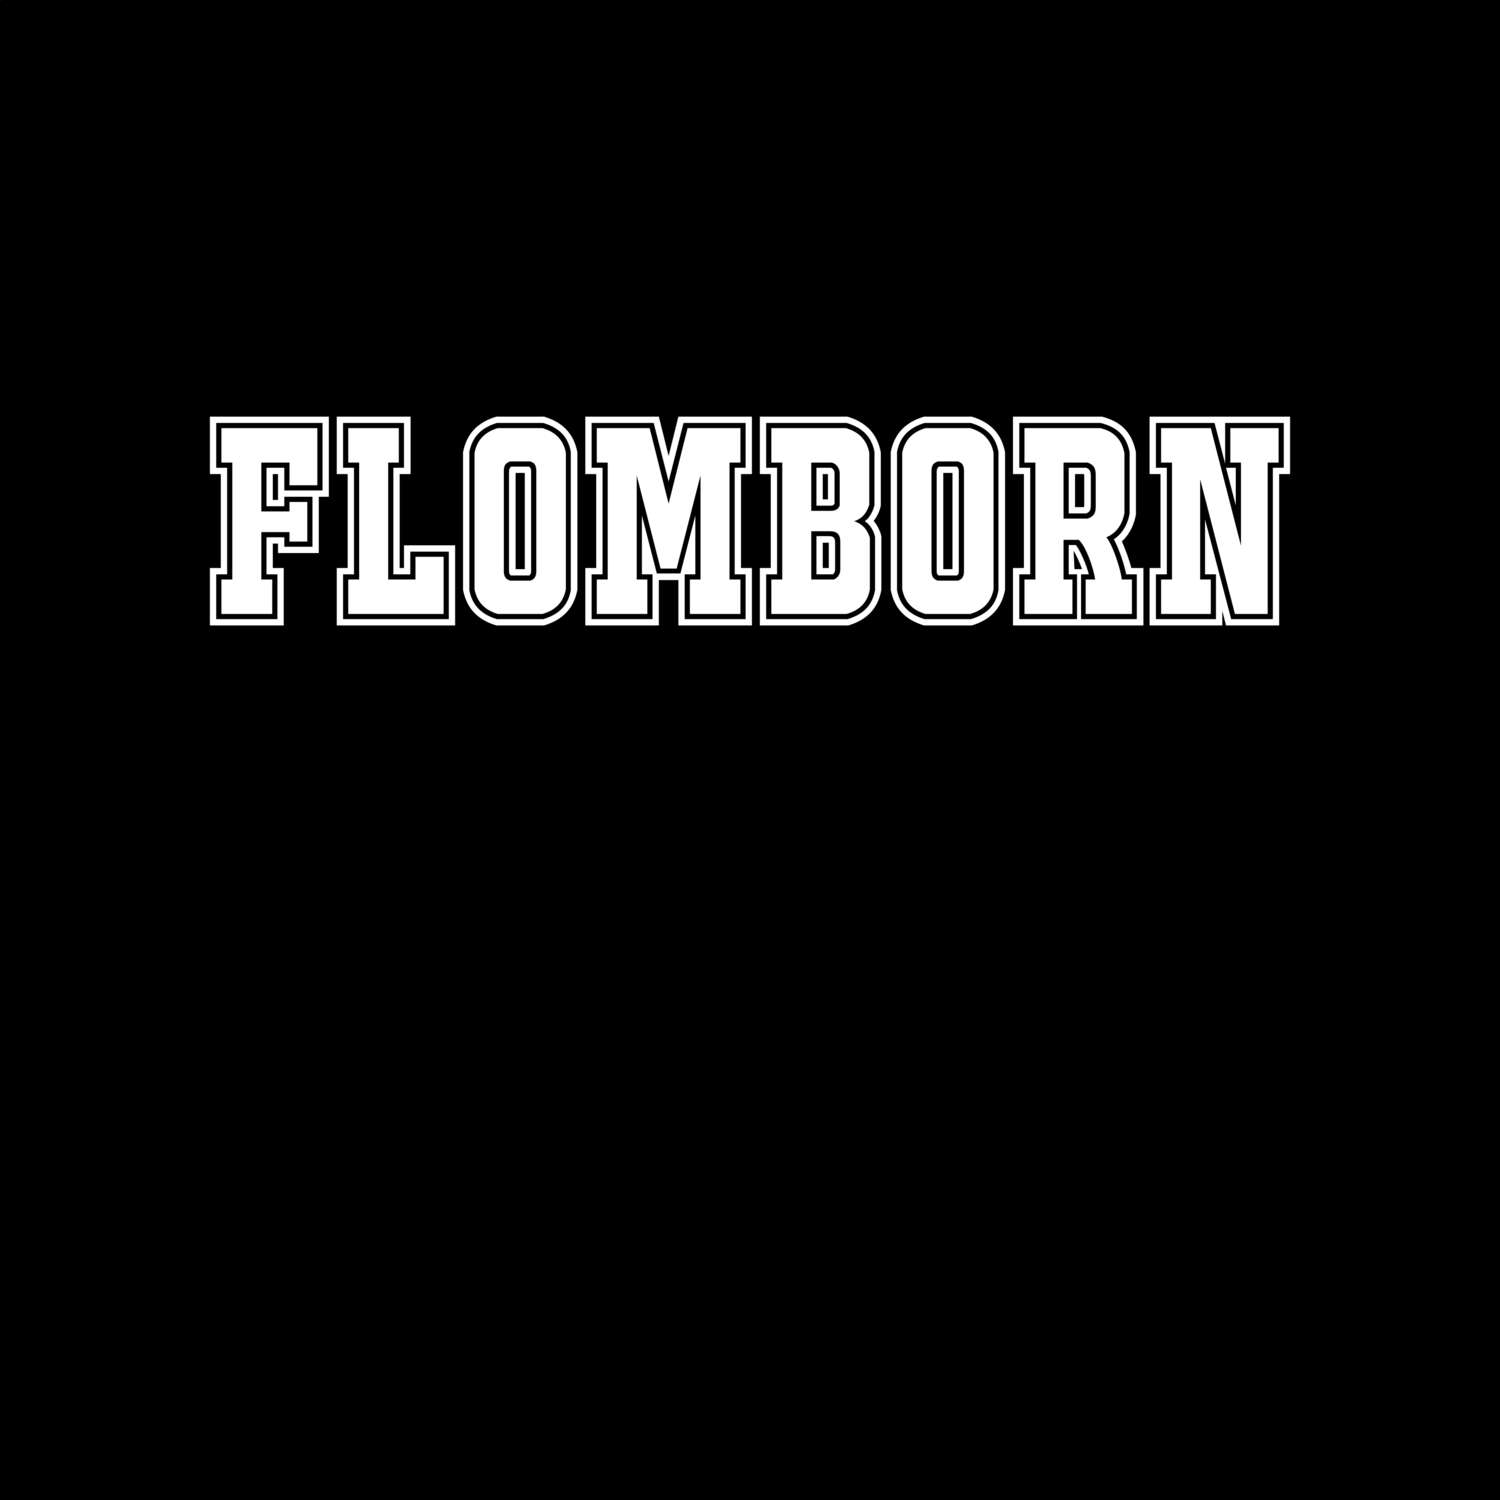 Flomborn T-Shirt »Classic«